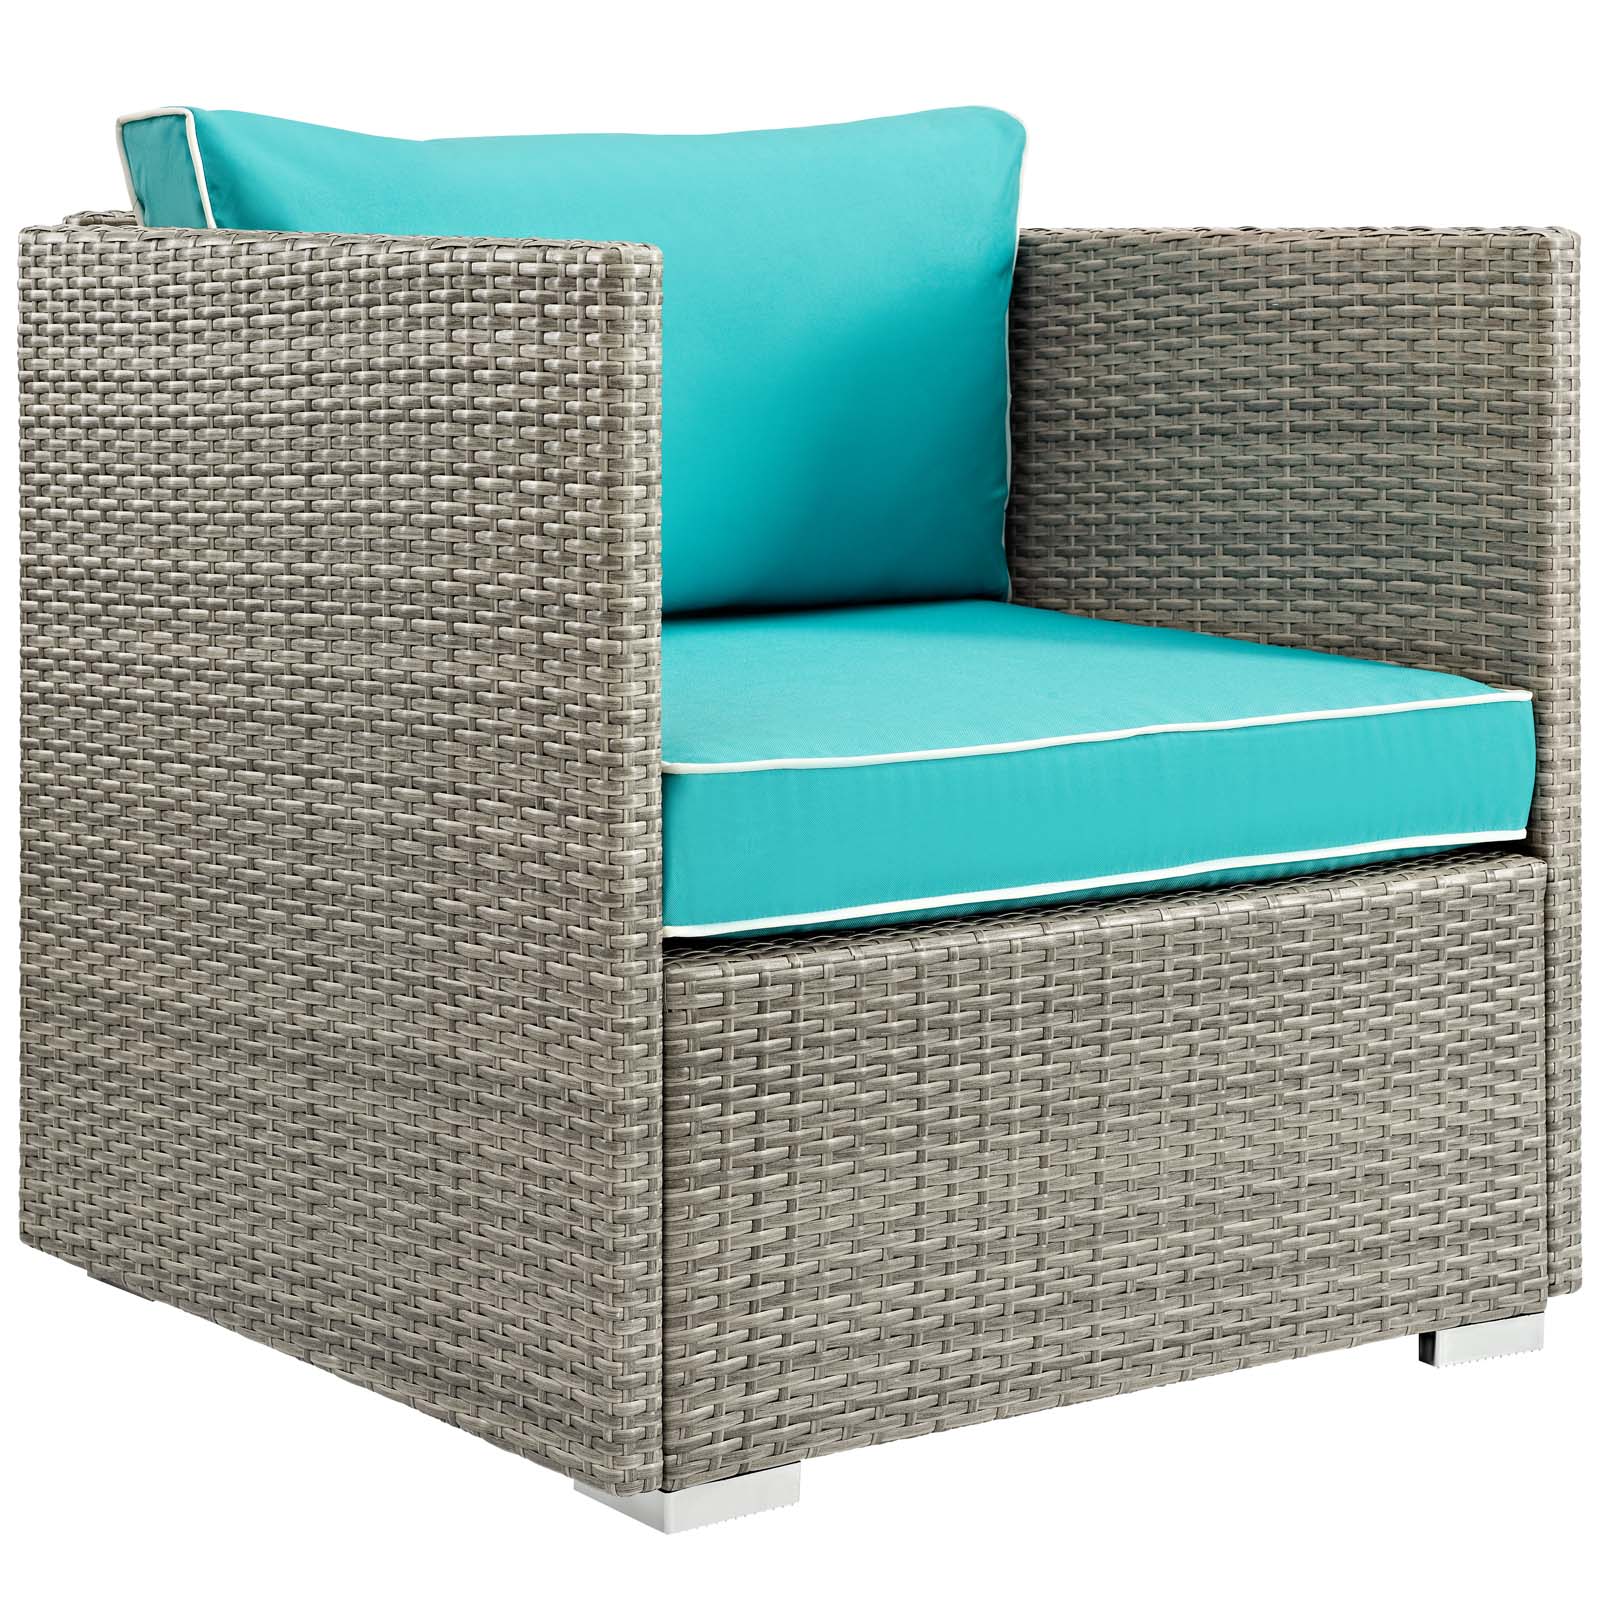 Modern Contemporary Urban Design Outdoor Patio Balcony Garden Furniture Lounge Chair Armchair, Sunbrella Rattan Wicker, Blue Light Gray - image 1 of 4